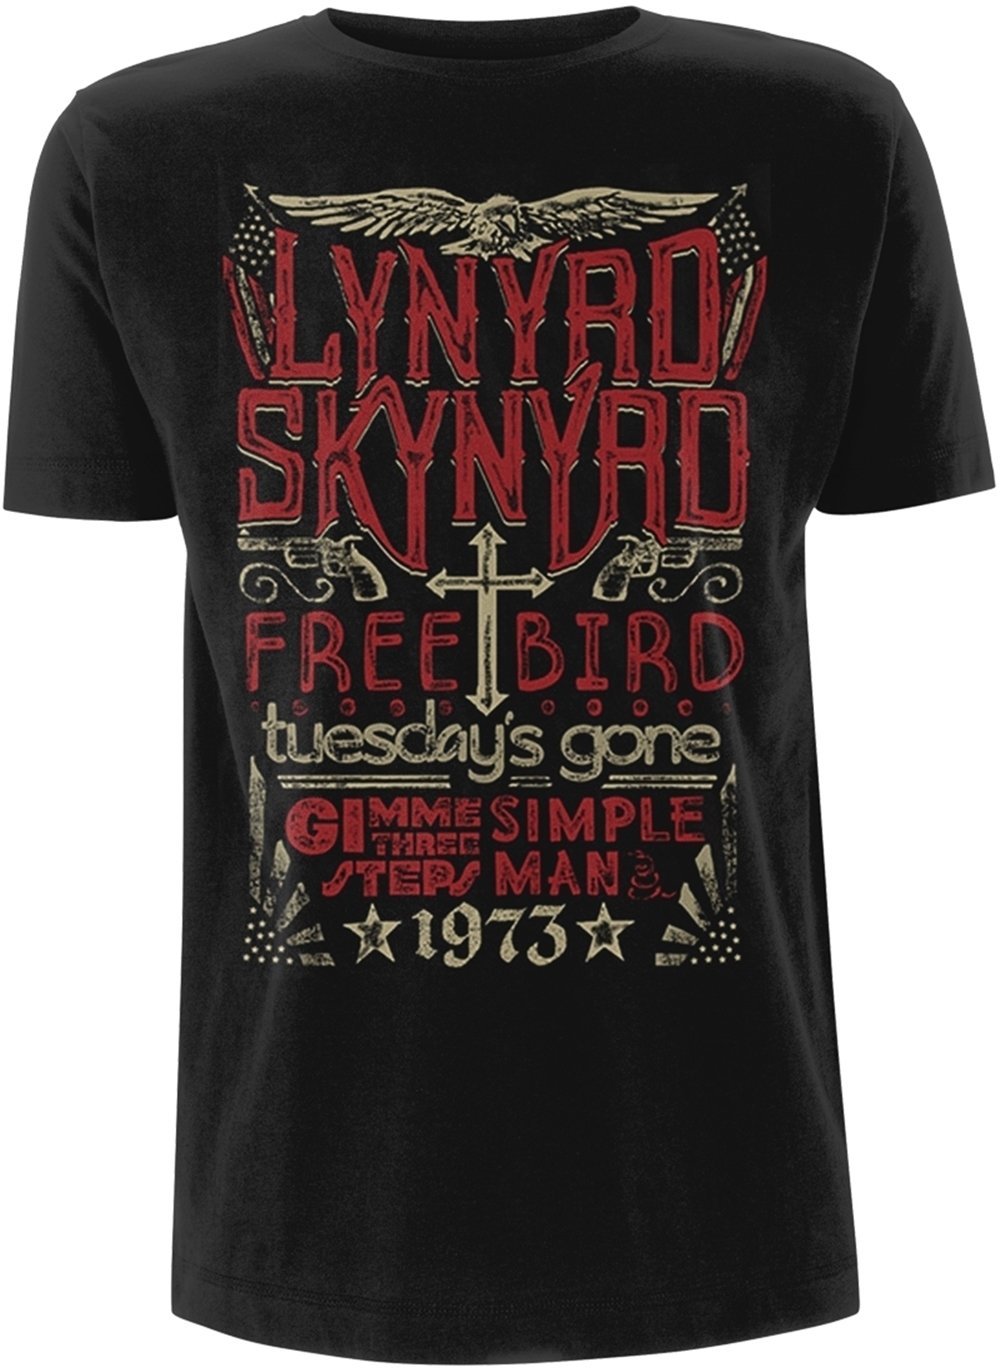 Shirt Lynyrd Skynyrd Shirt Freebird 1973 Hits Black S